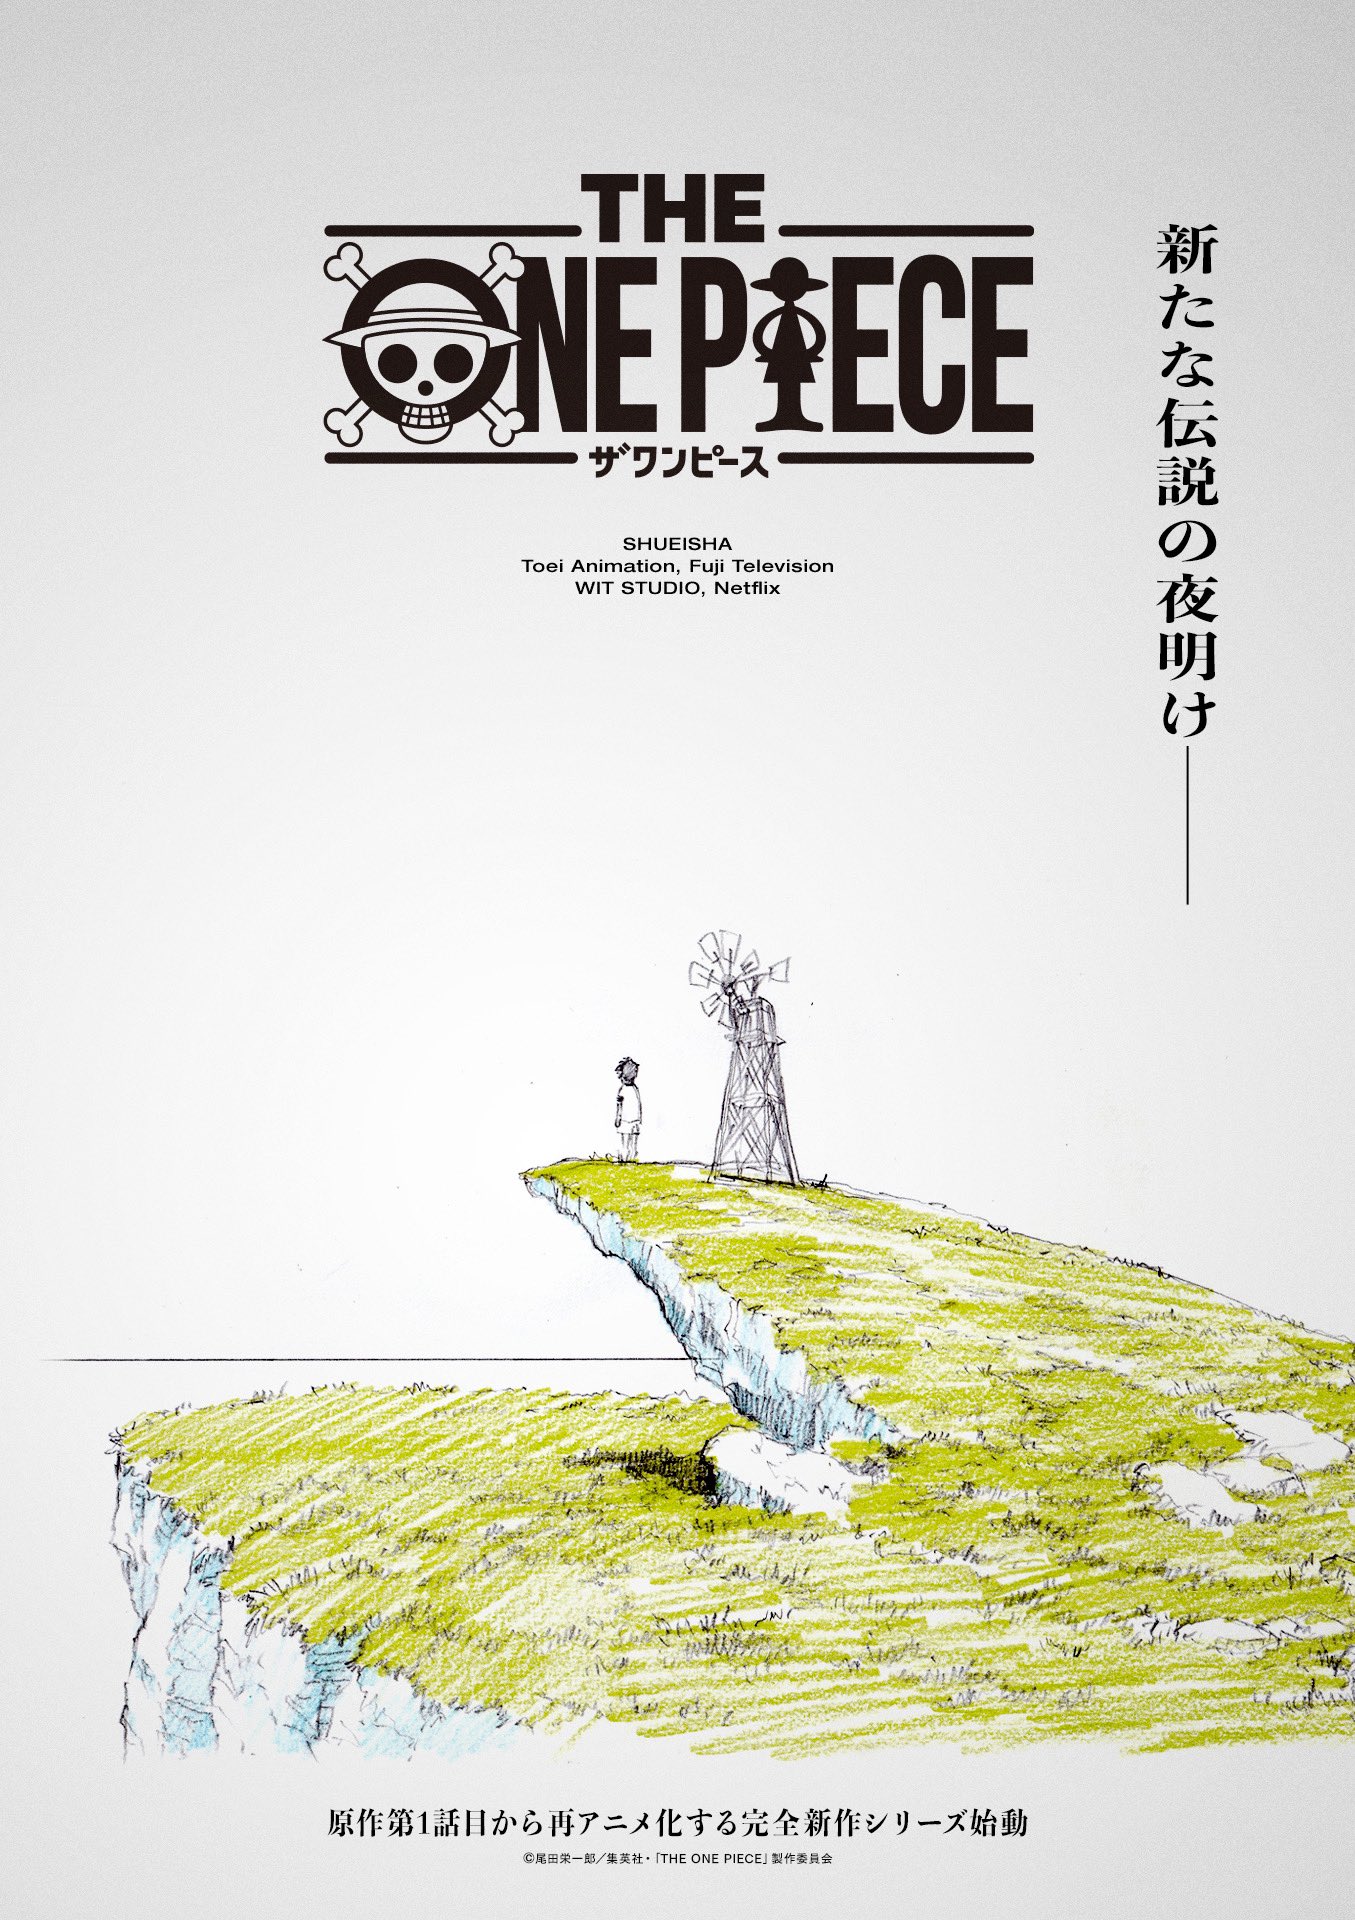 Imagen promocional de One Piece